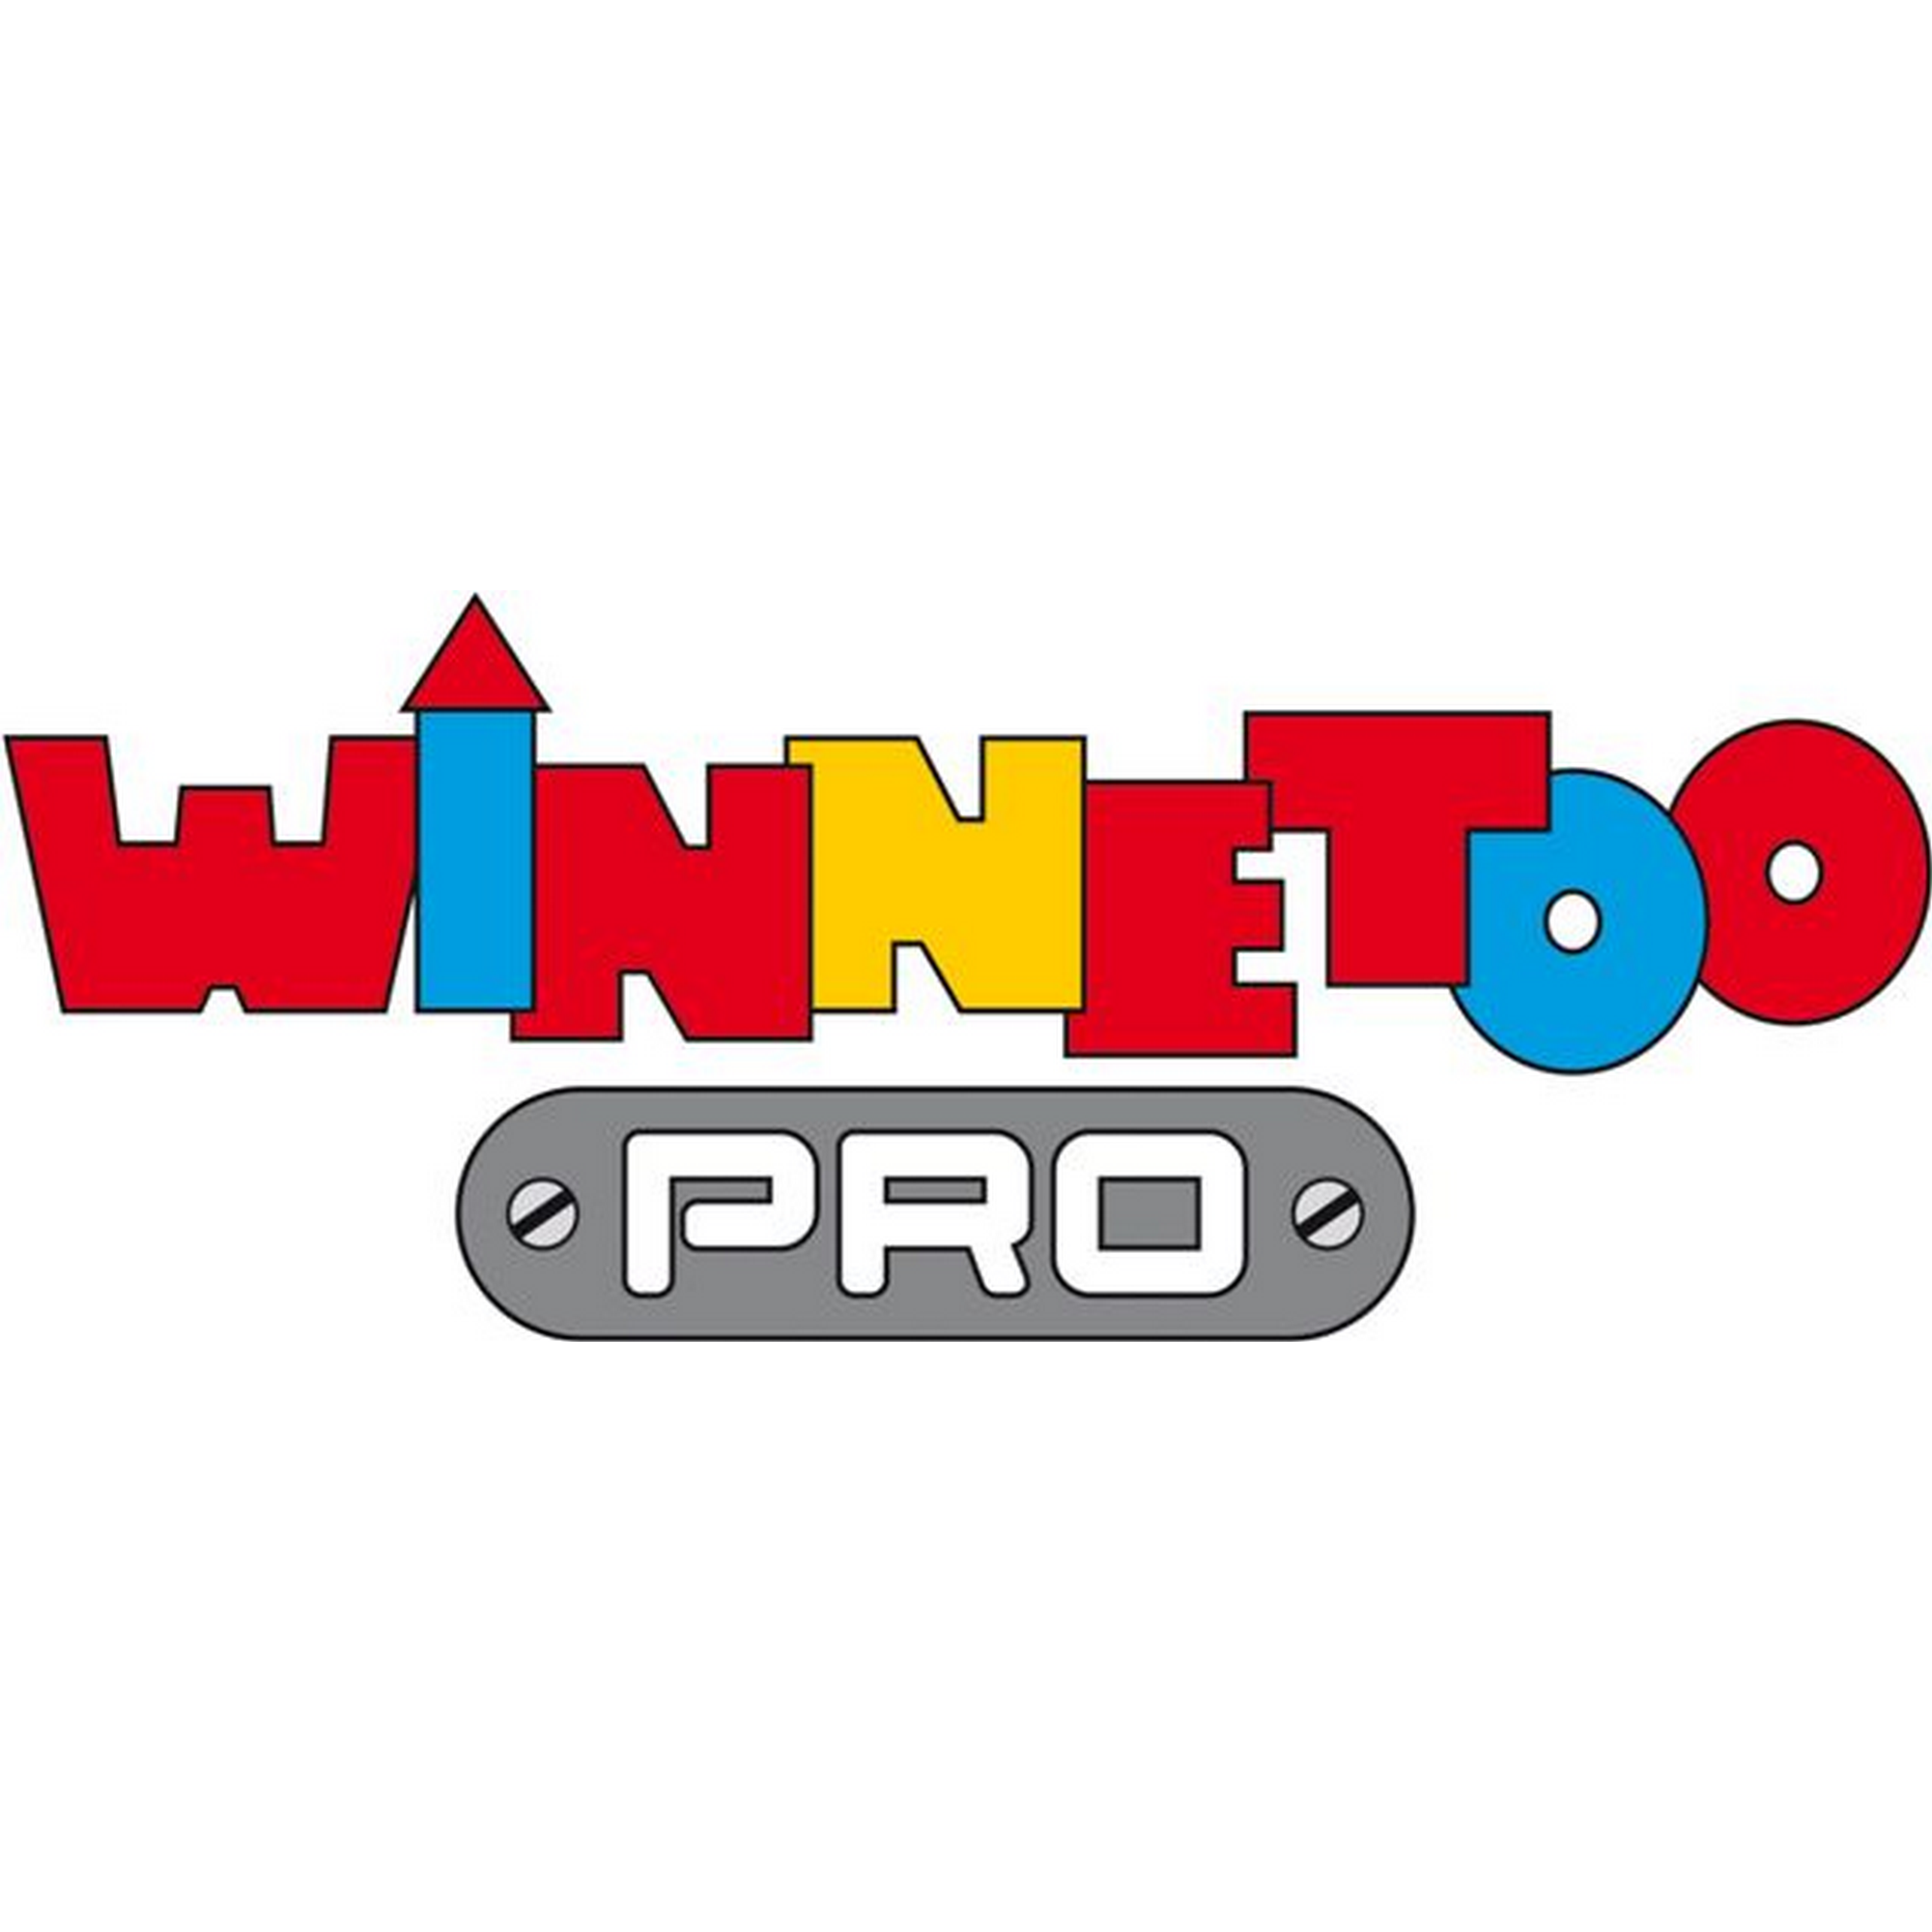 Kletterwand-Komplettset 'Winnetoo Pro' 80 x 118 x 2 cm, passend für Grundturm oben + product picture